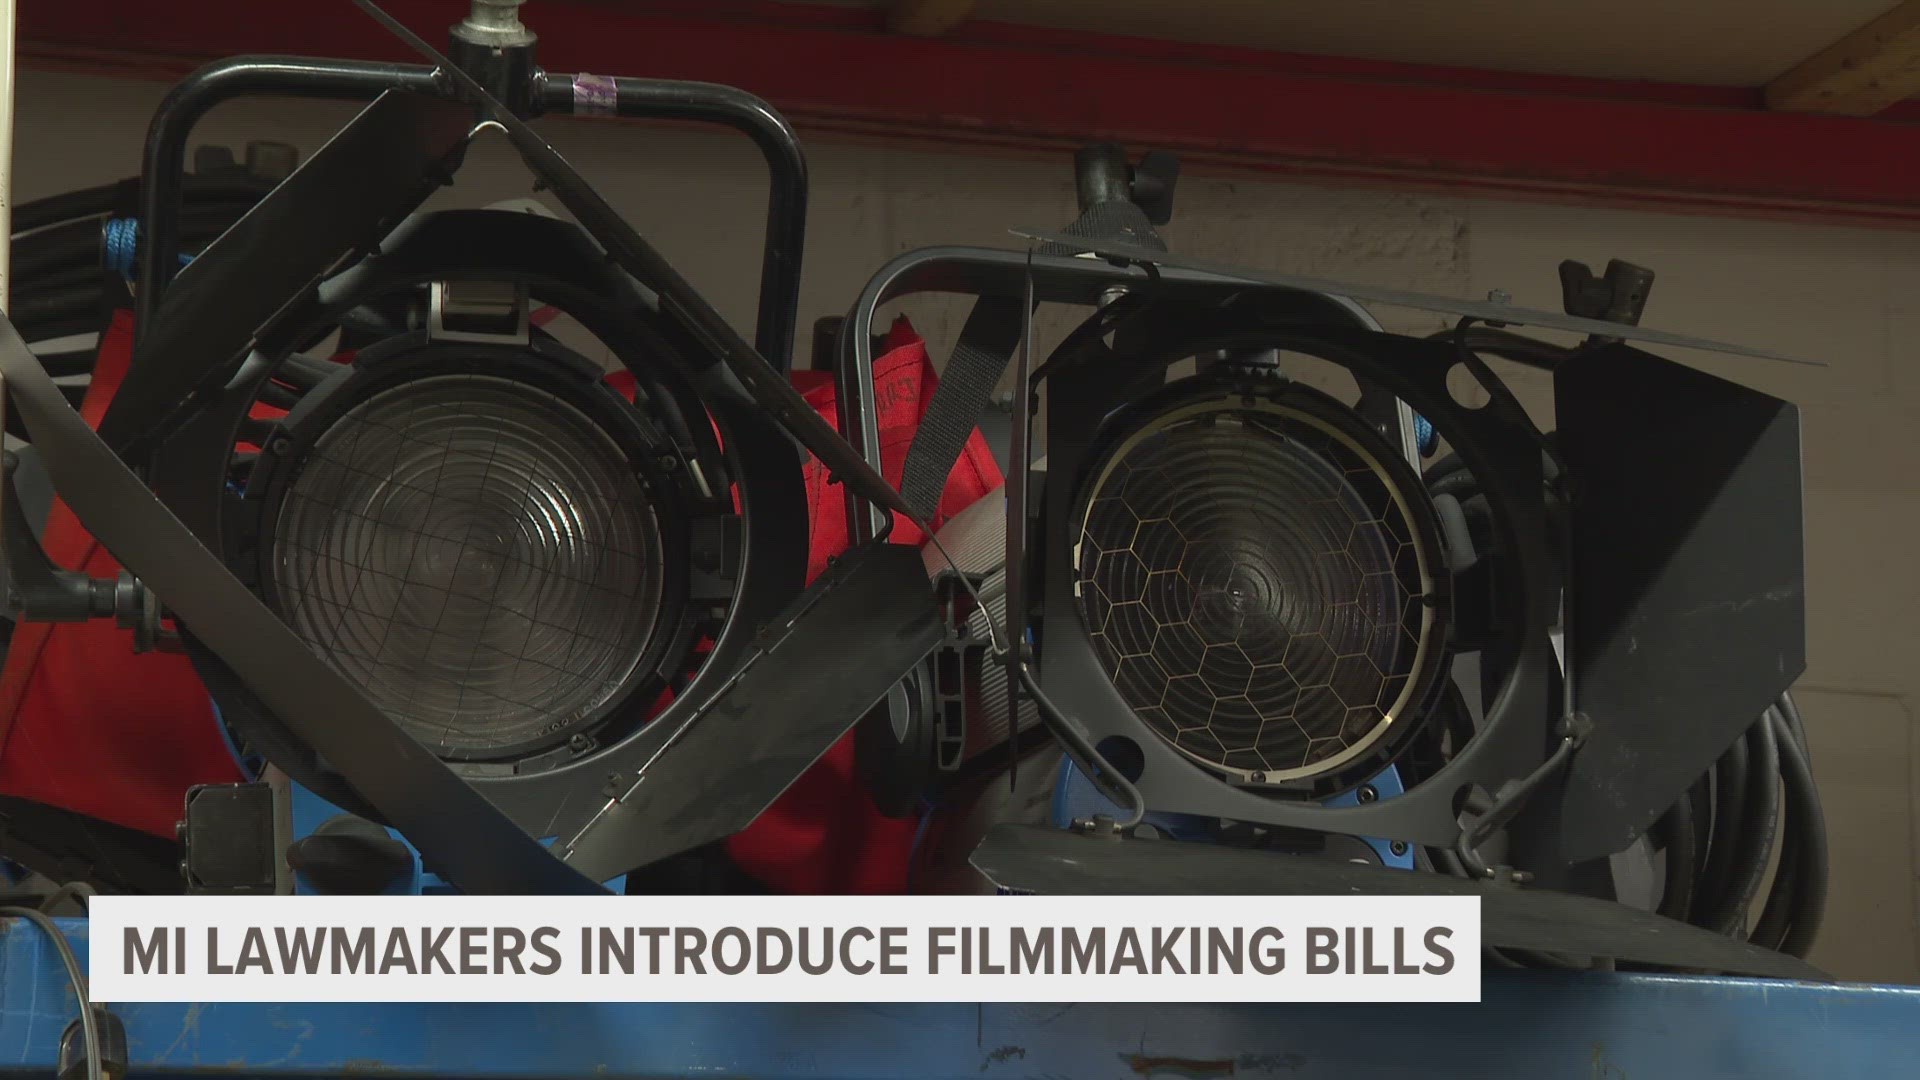 Michigan lawmakers introduced legislation for filmmaking.